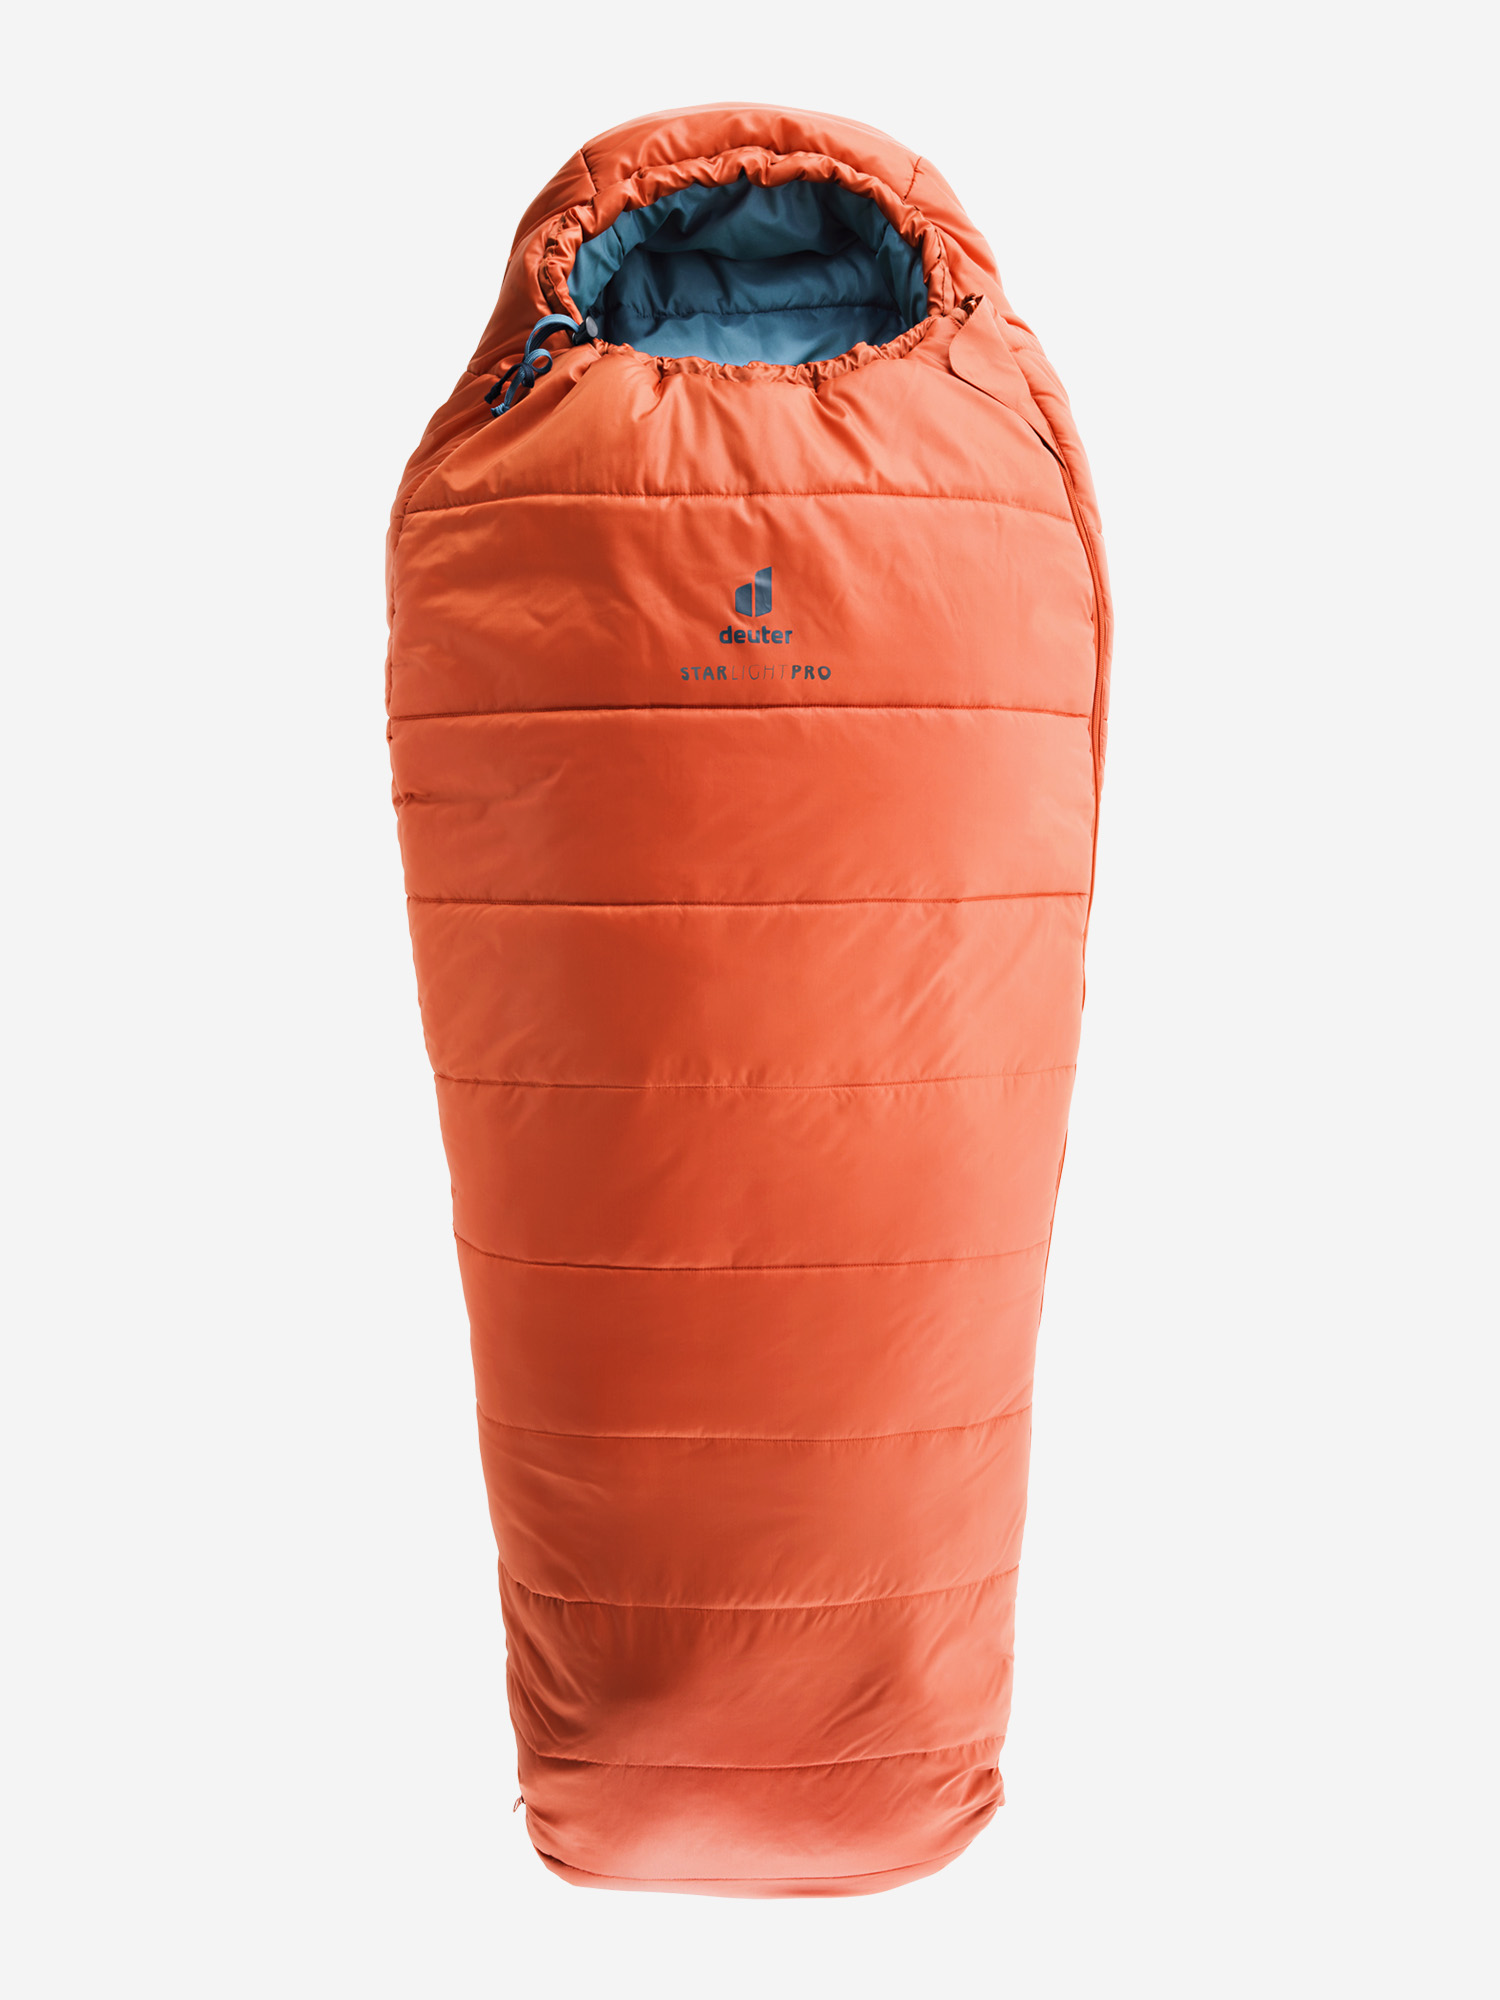 Спальный мешок Deuter Starlight Pro, Оранжевый